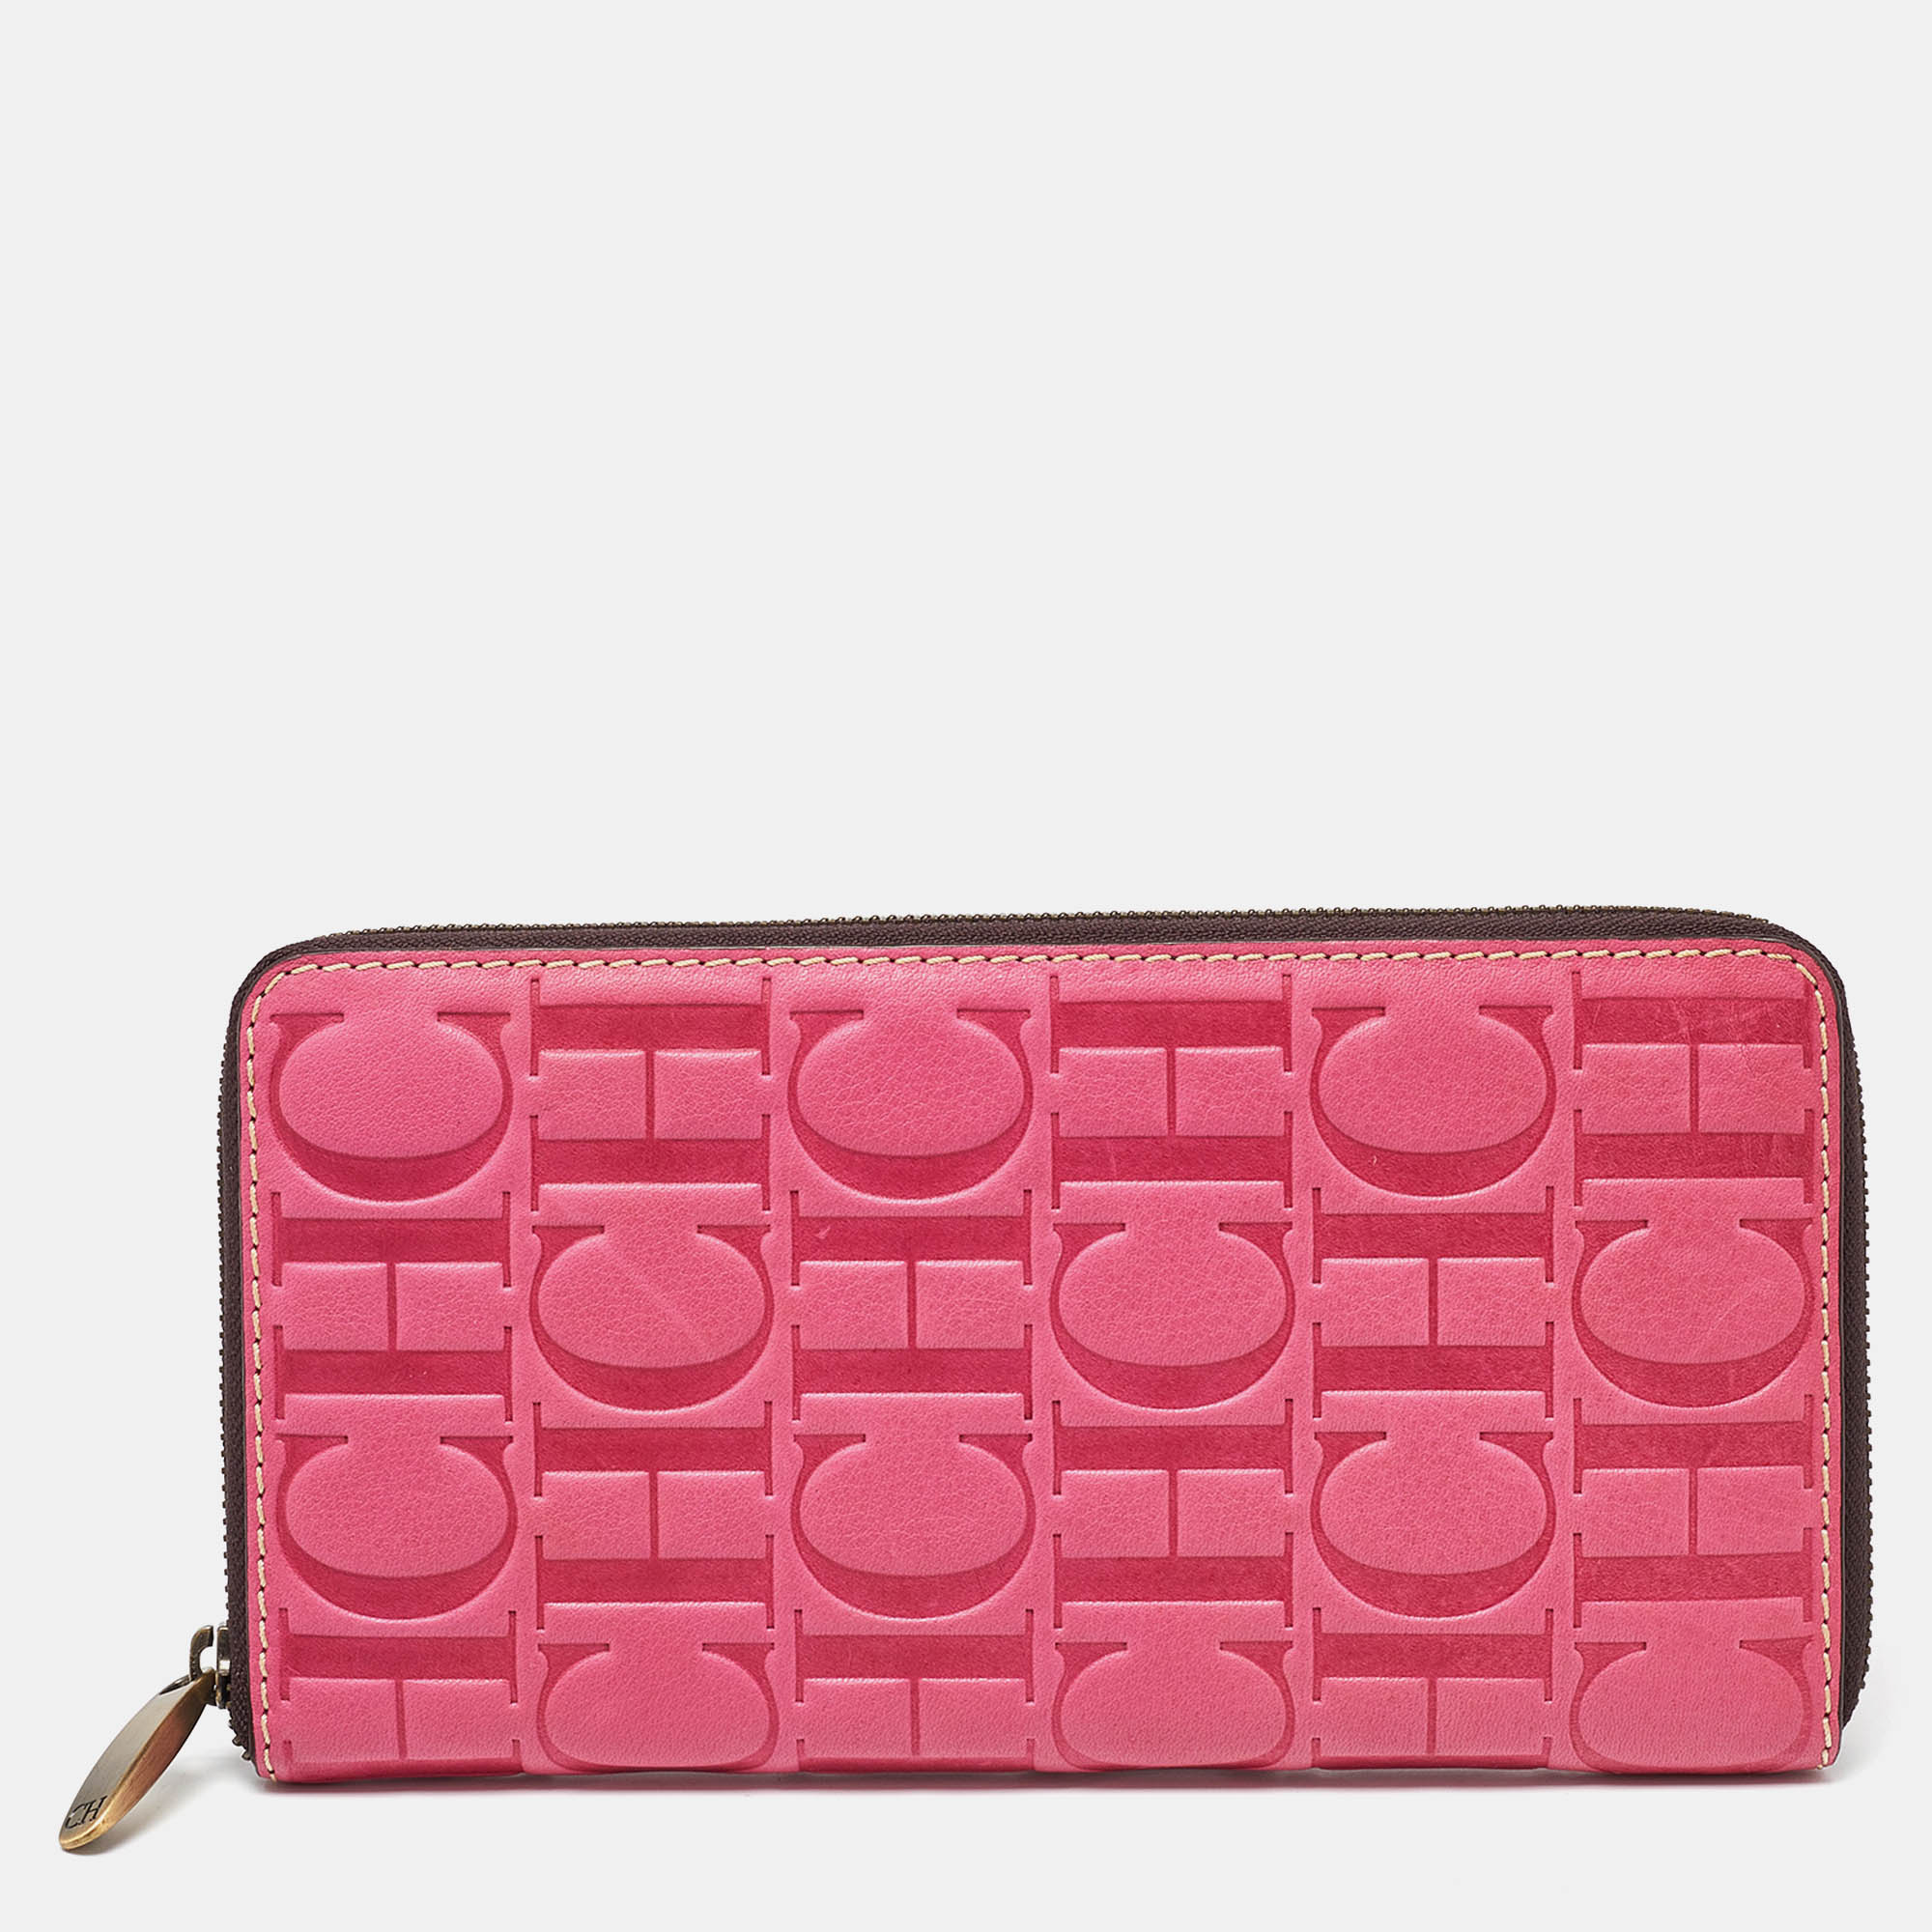 Ch carolina herrera pink embossed leather oversize wallet